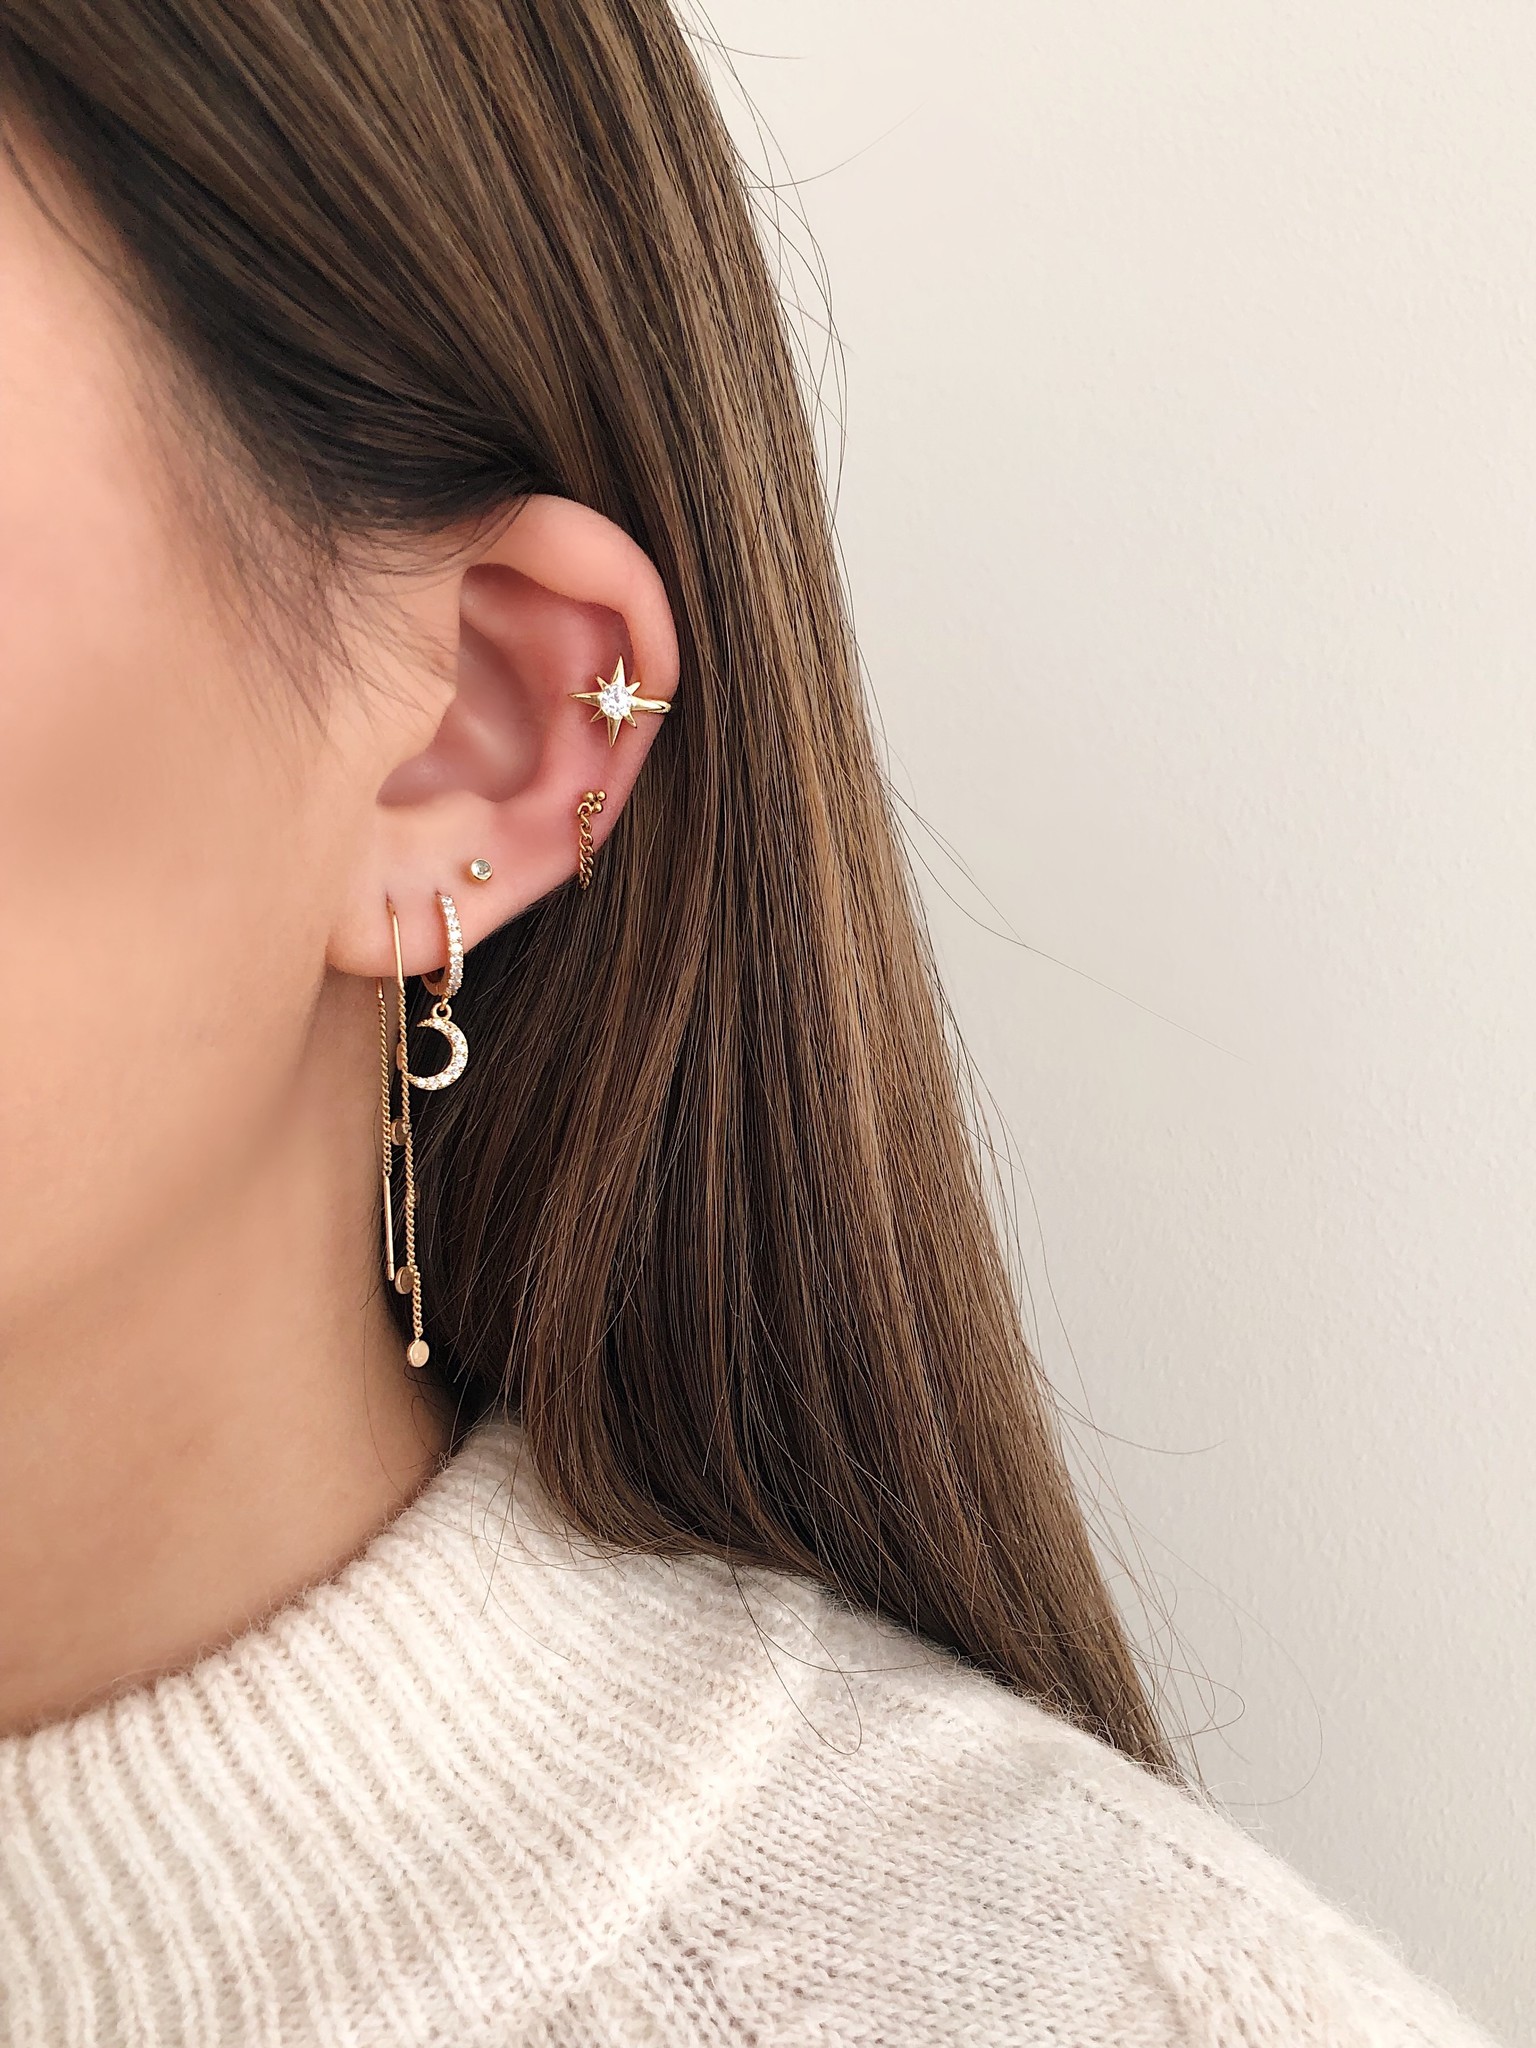 Ear Cuff with Crystal Chain in Gold | Jewellery by Astrid & Miyu